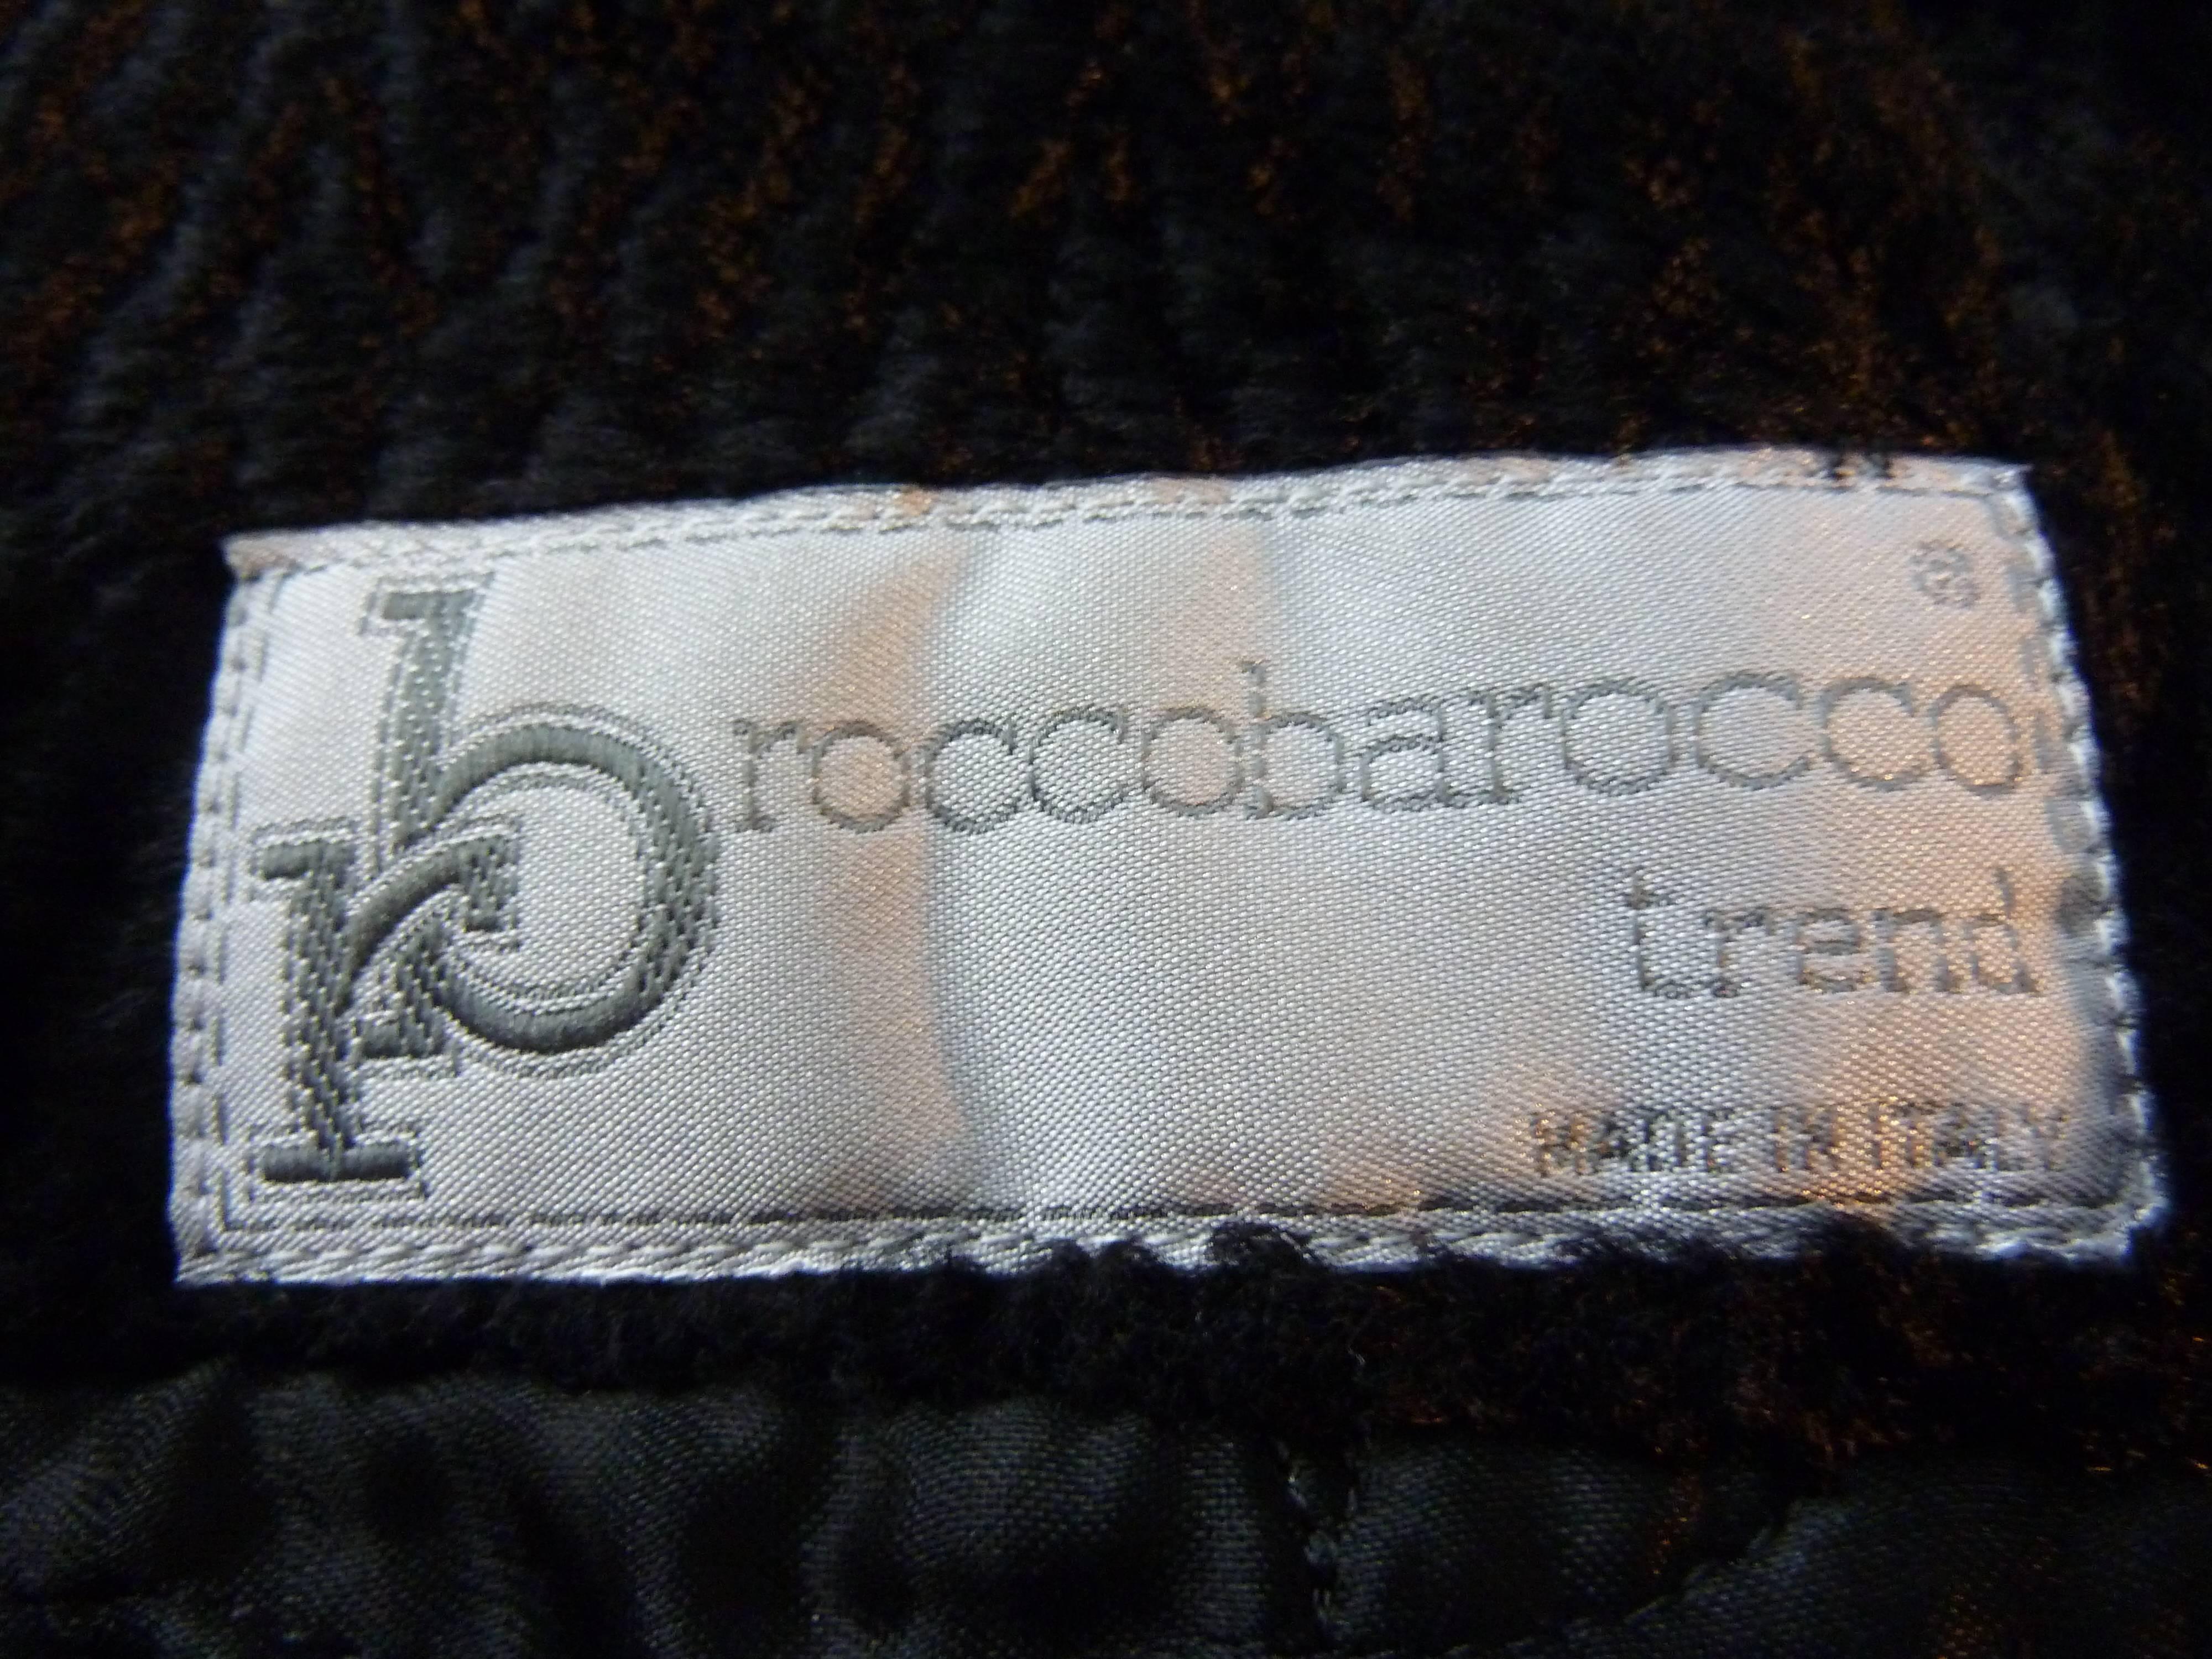 RoccoBarocco fur synthetic poncho batwing coat women's black size 32 US bolero For Sale 1